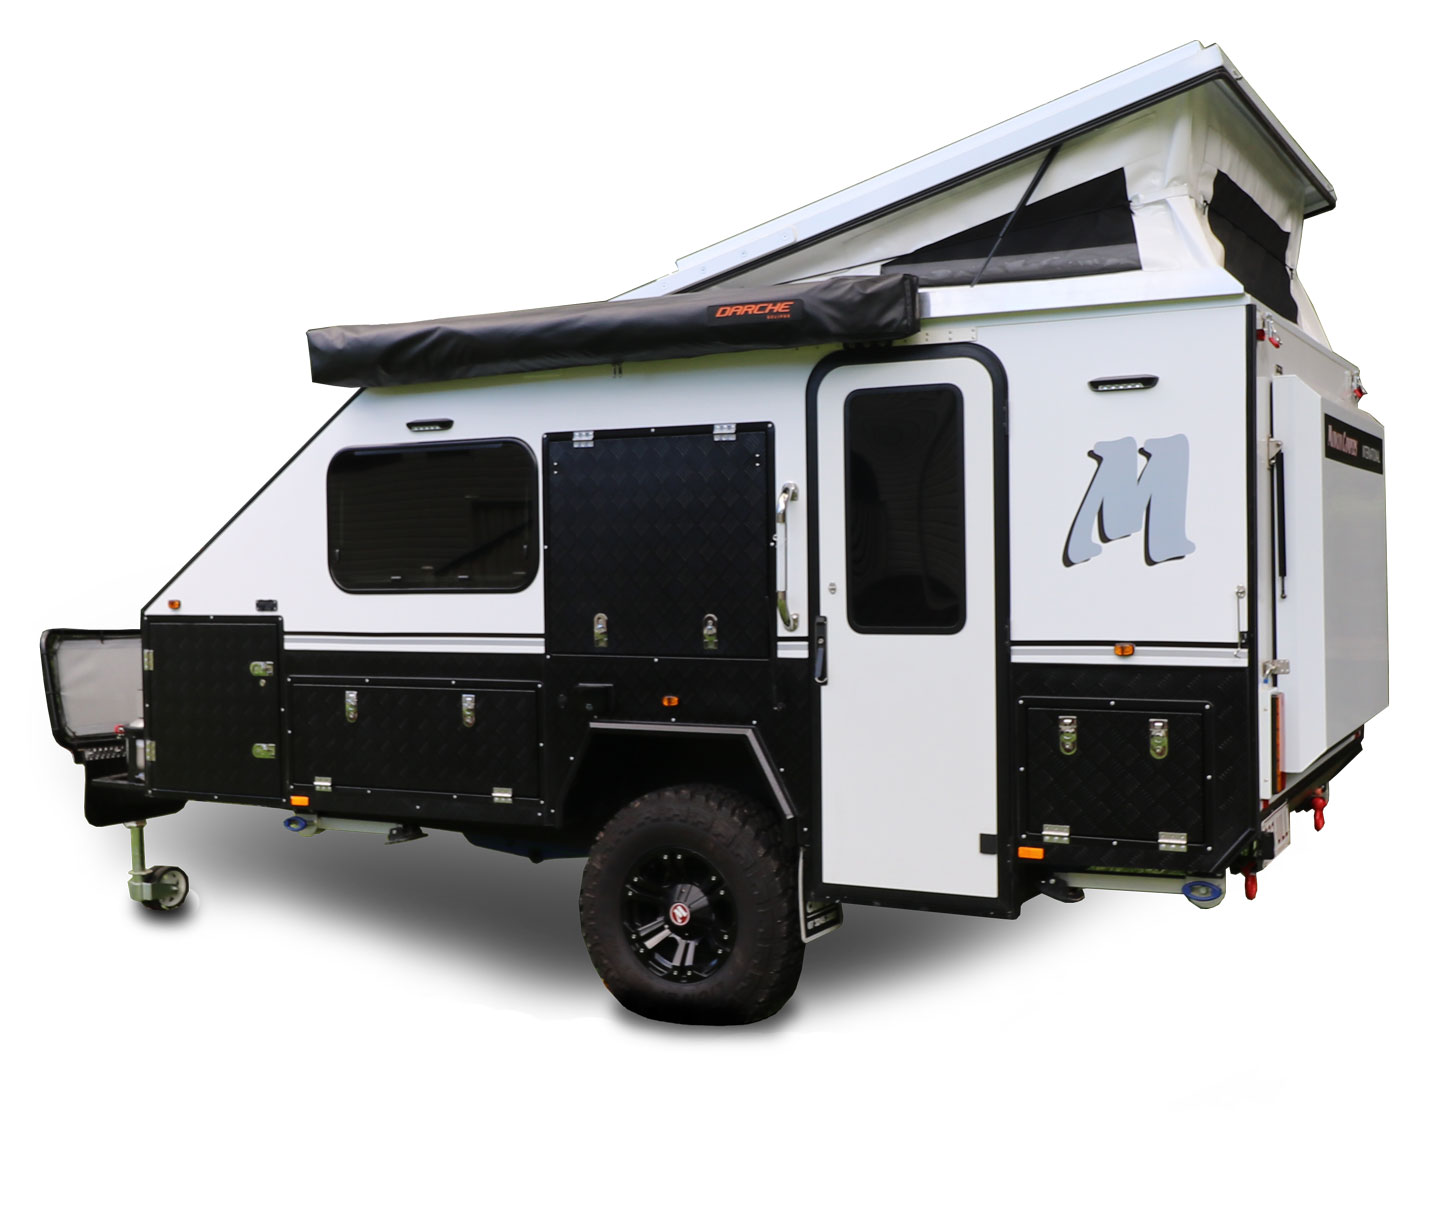 Modcon RV off road hybrid camper trailers C3